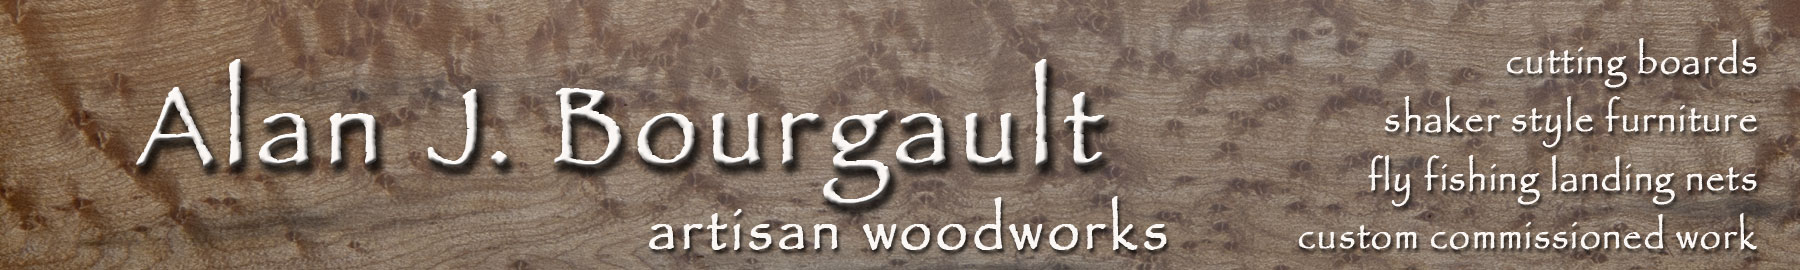 Alan Bourgault, Artisan woodwork, cutting boards, shaker furniture, landing nets, custom woodworking